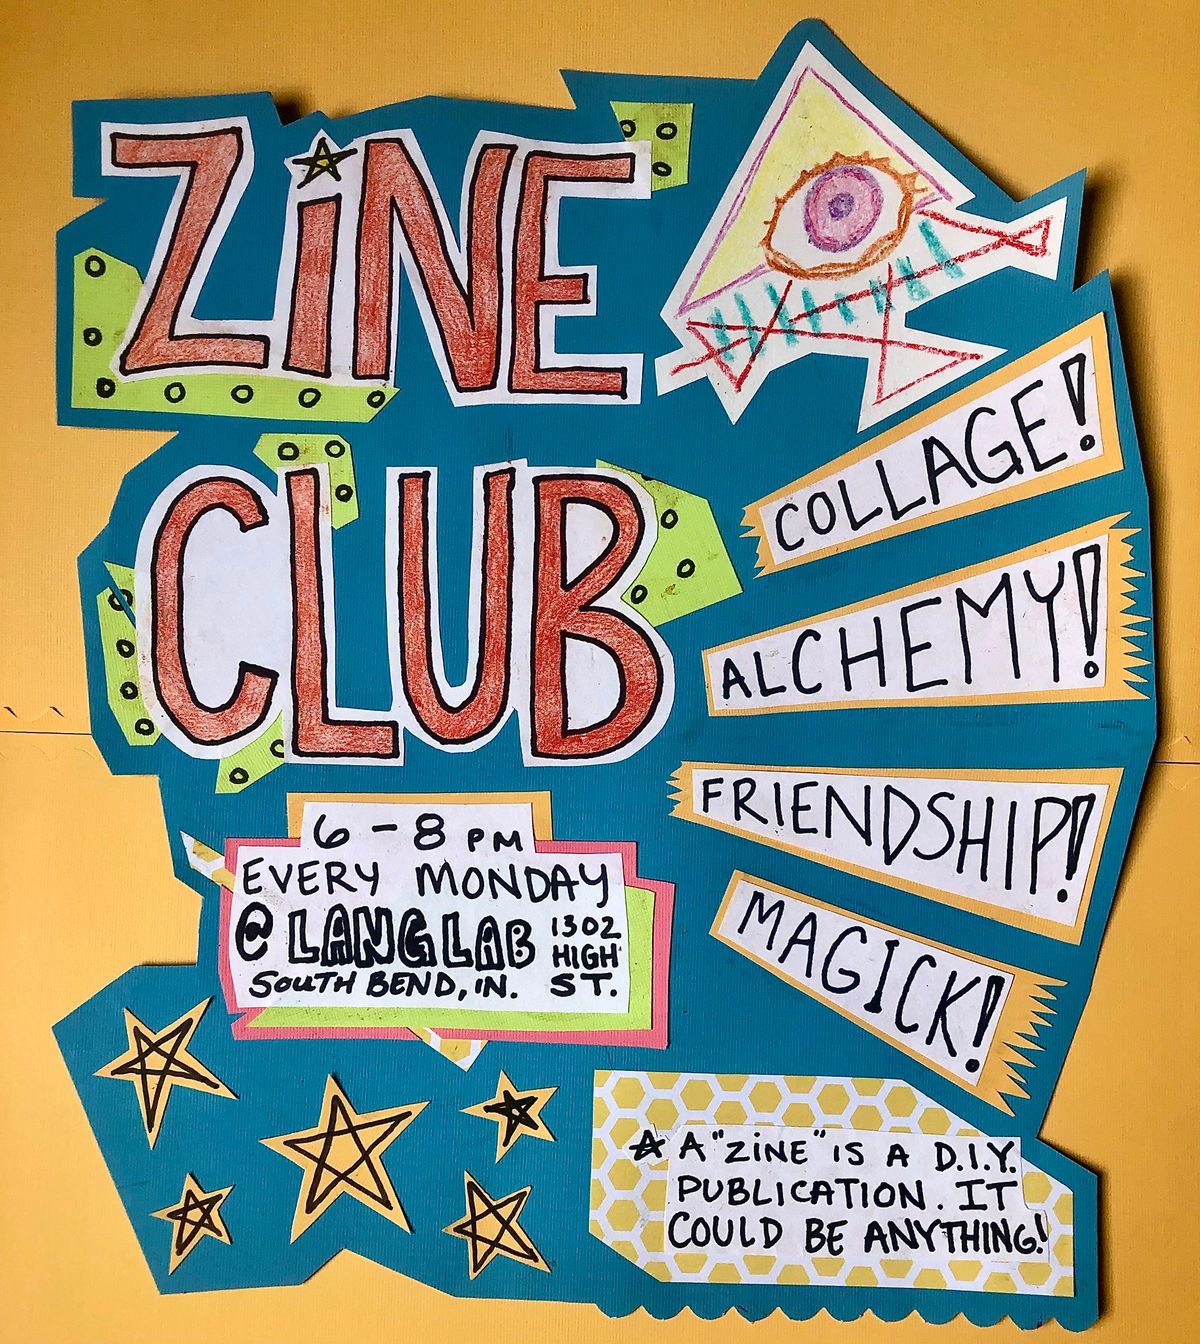 Collective Zine Making Club @ LangLab